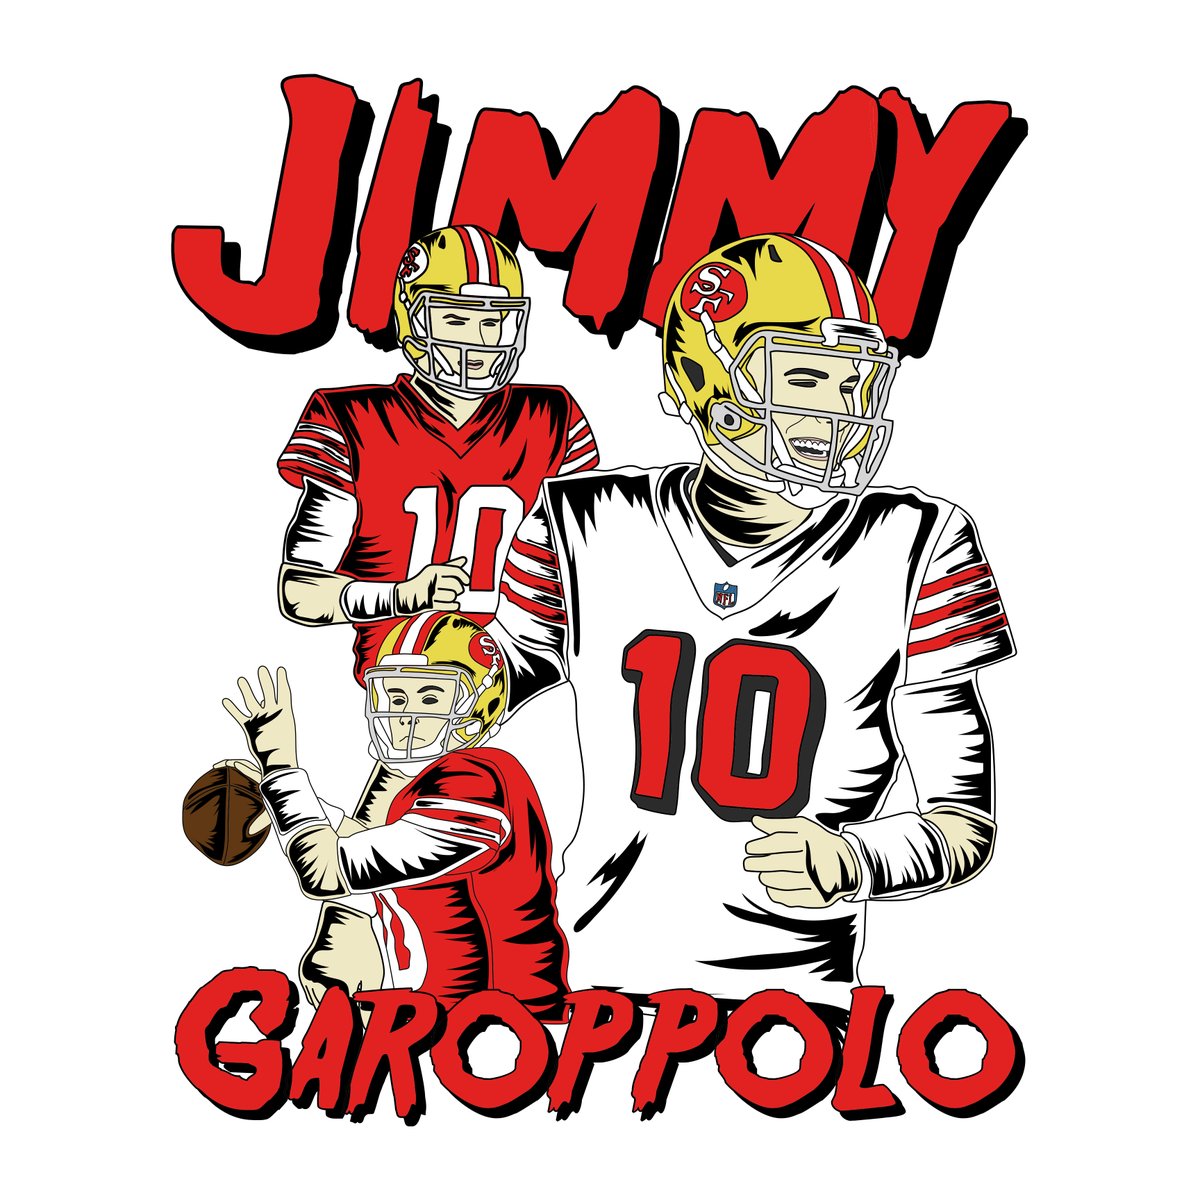 Jimmy Garoppolo #73
.
.
#camiseta #camisetas #camisetasmasculinas #camisetasfemininas #moda #roupas #streetwear #jimmygaroppolo #sanfrancisco49ers #sf49brasil #nflbrasil #nflbr #futebolameriano #nfldazueira